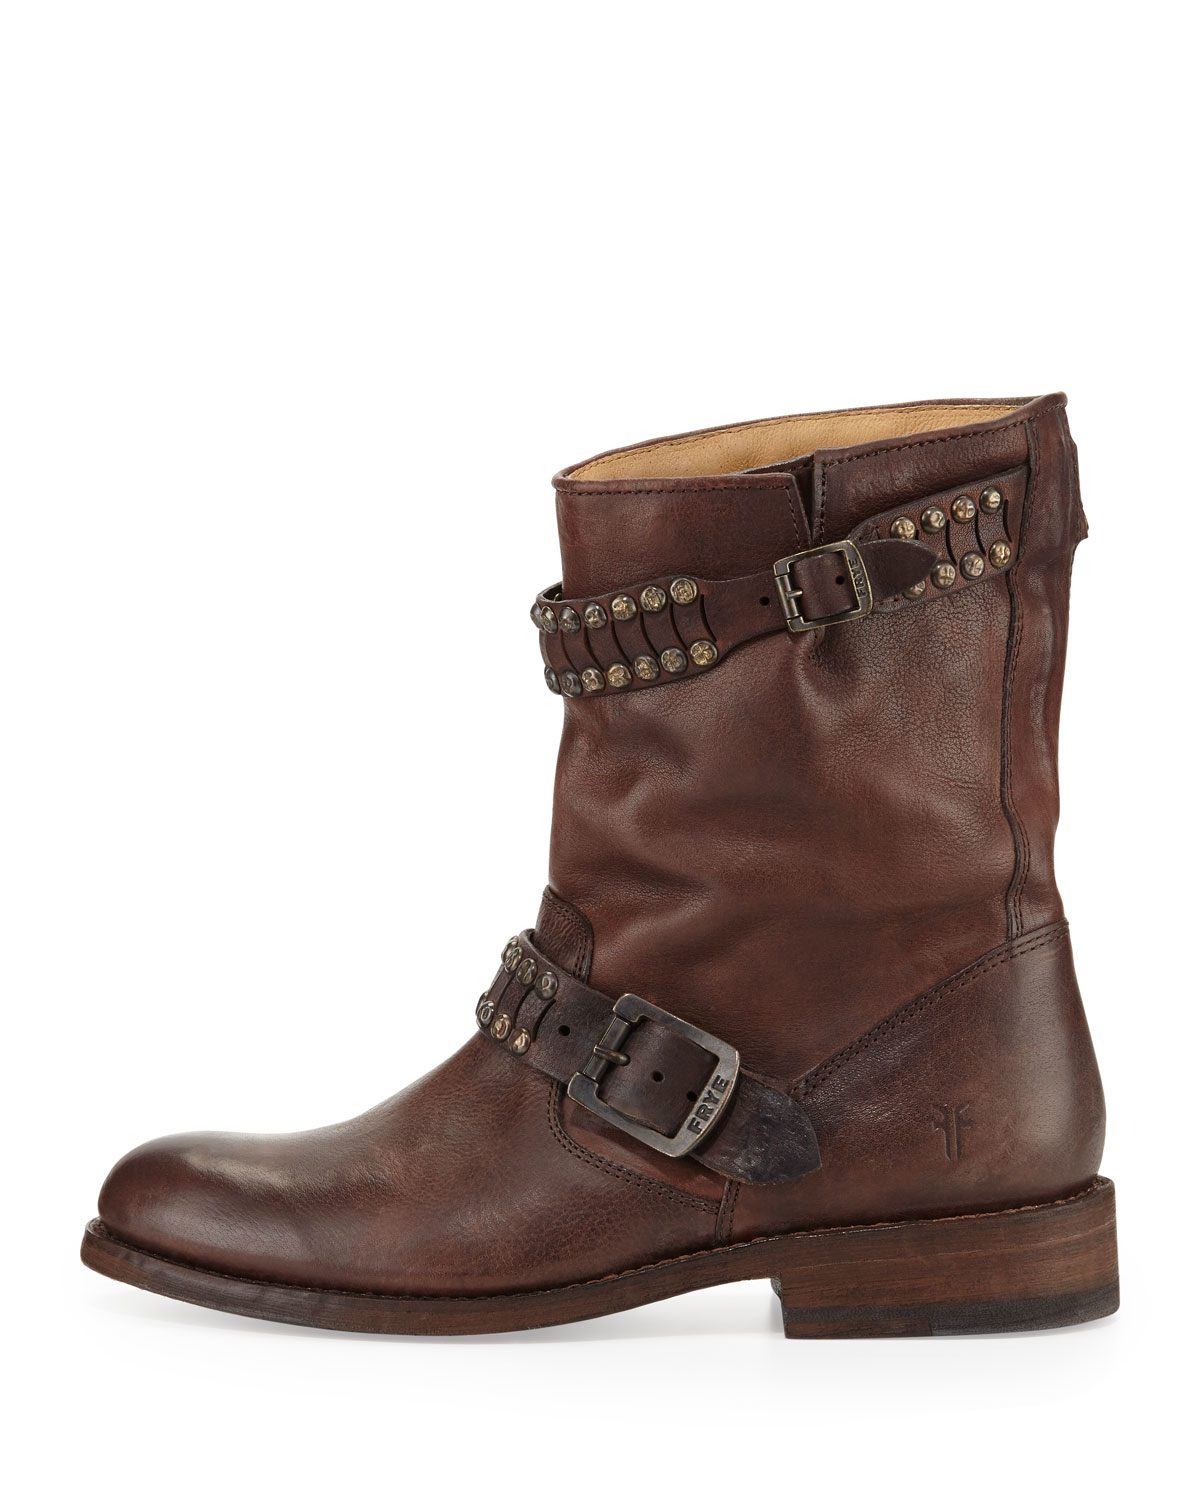 Frye Jayden Studded Leather Moto Boot in Dark Brown (Brown